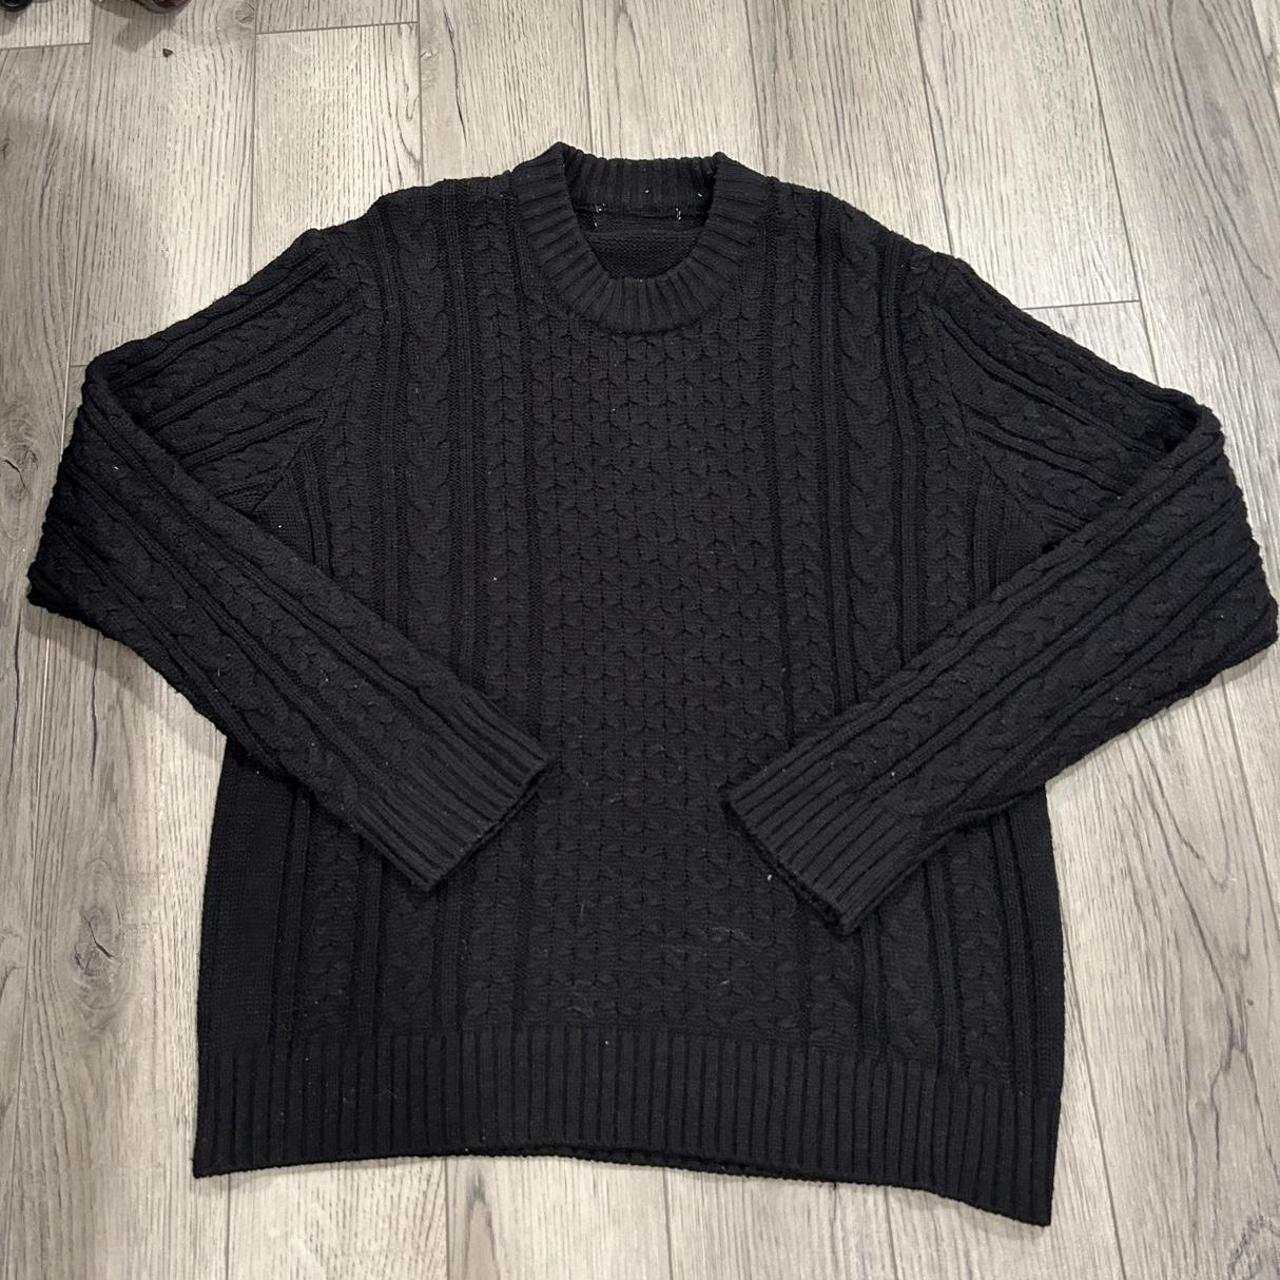 cute black knit sweater - size Medium - no... - Depop